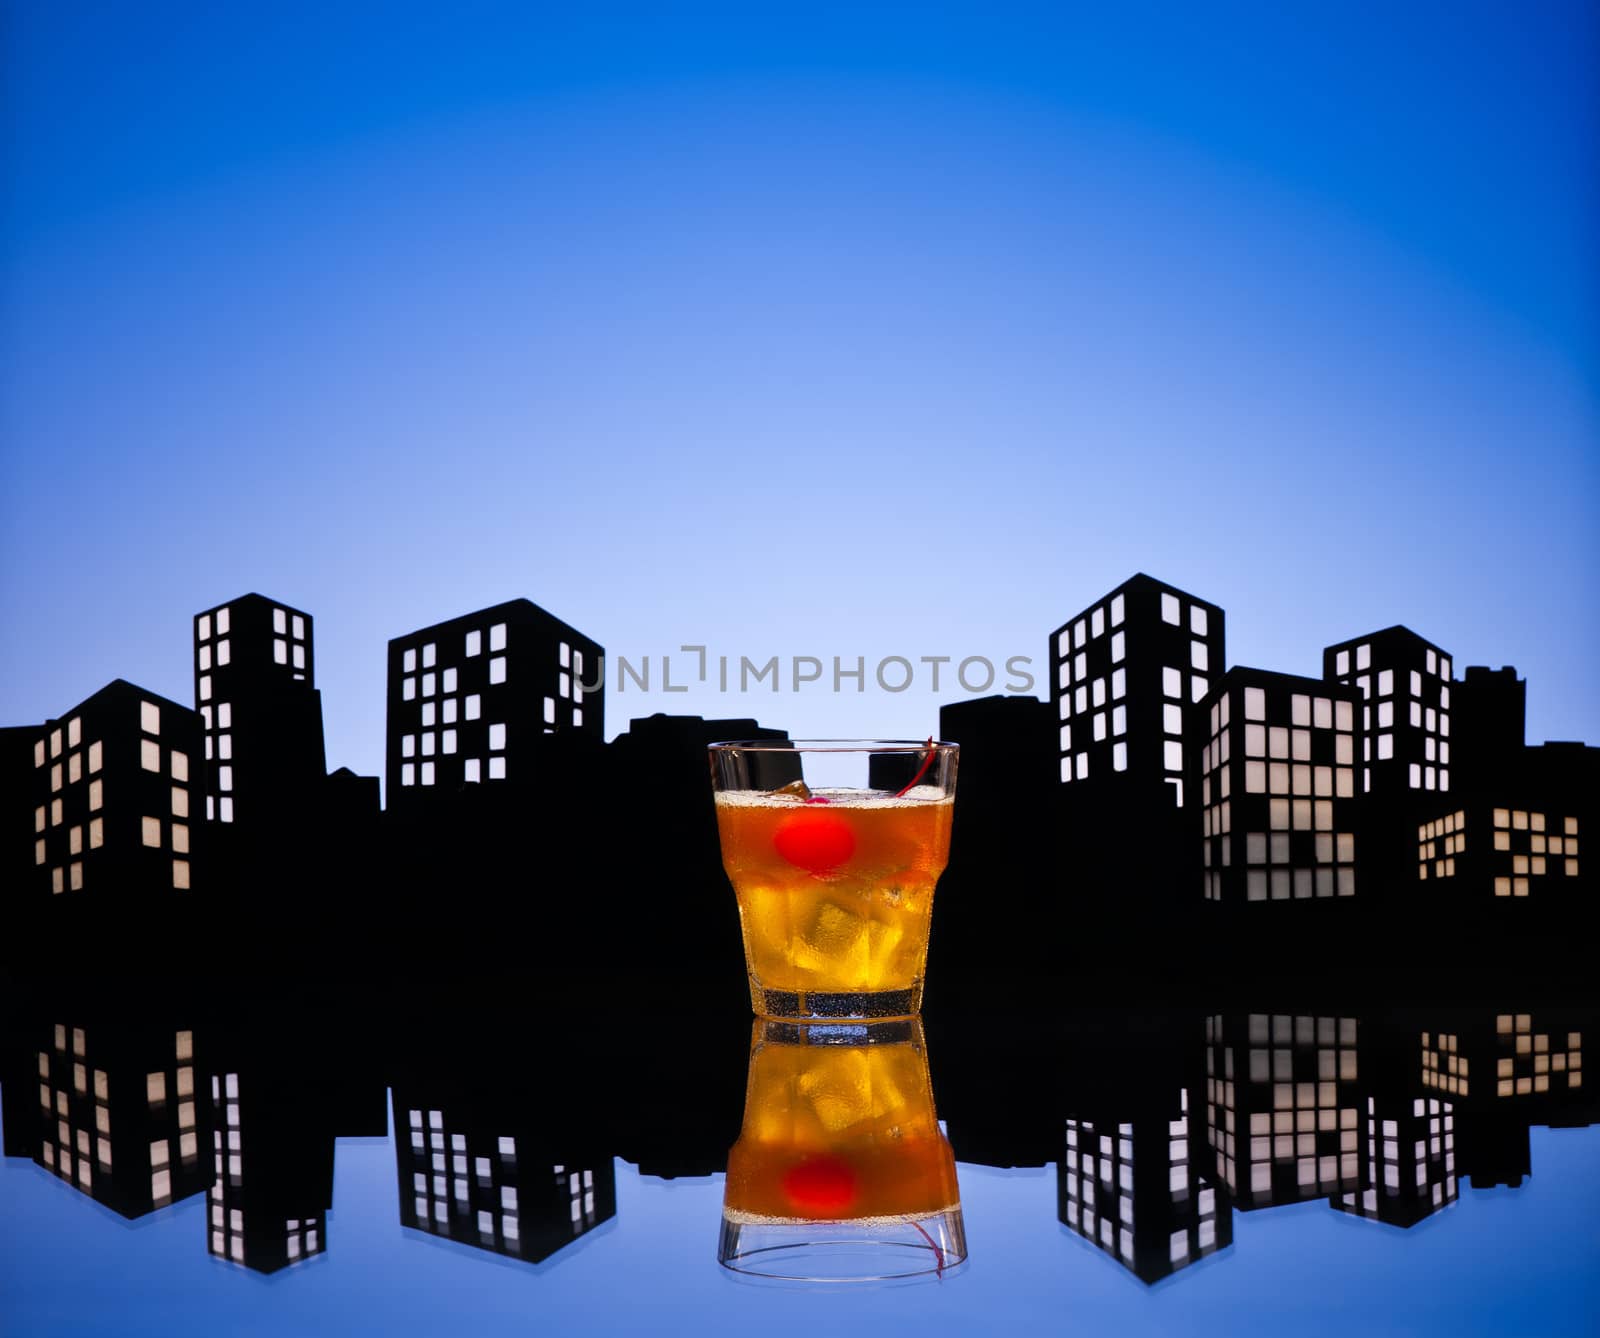 Metropolis Mai Tai cocktail in city skyline setting